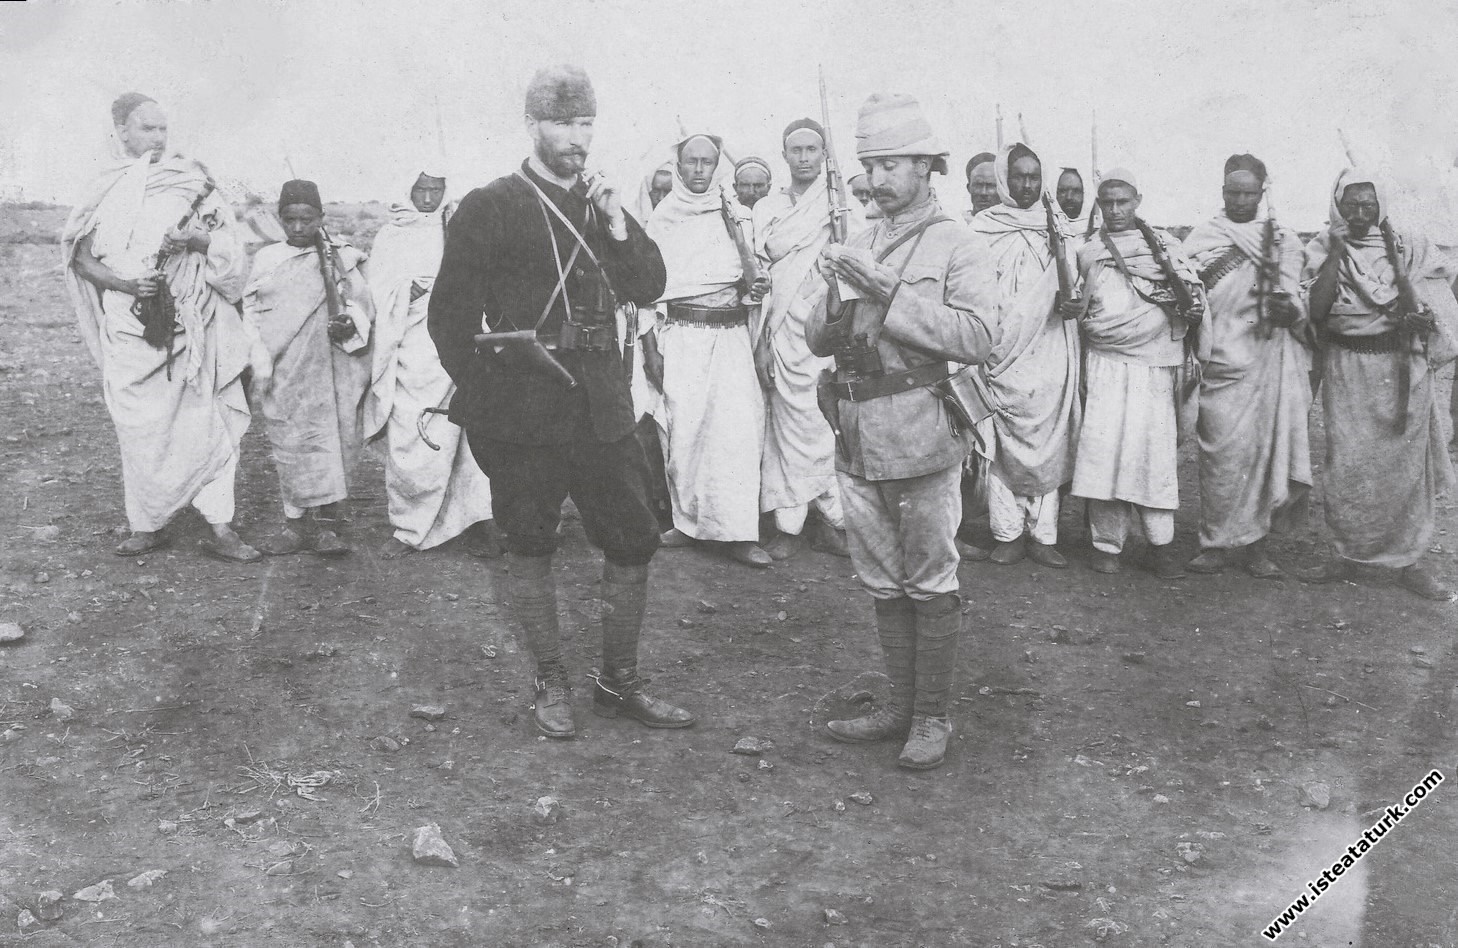 Staff Major Mustafa Kemal dictating his orders in front of mujahid Bedouin forces in Derne. (08.05.1912)